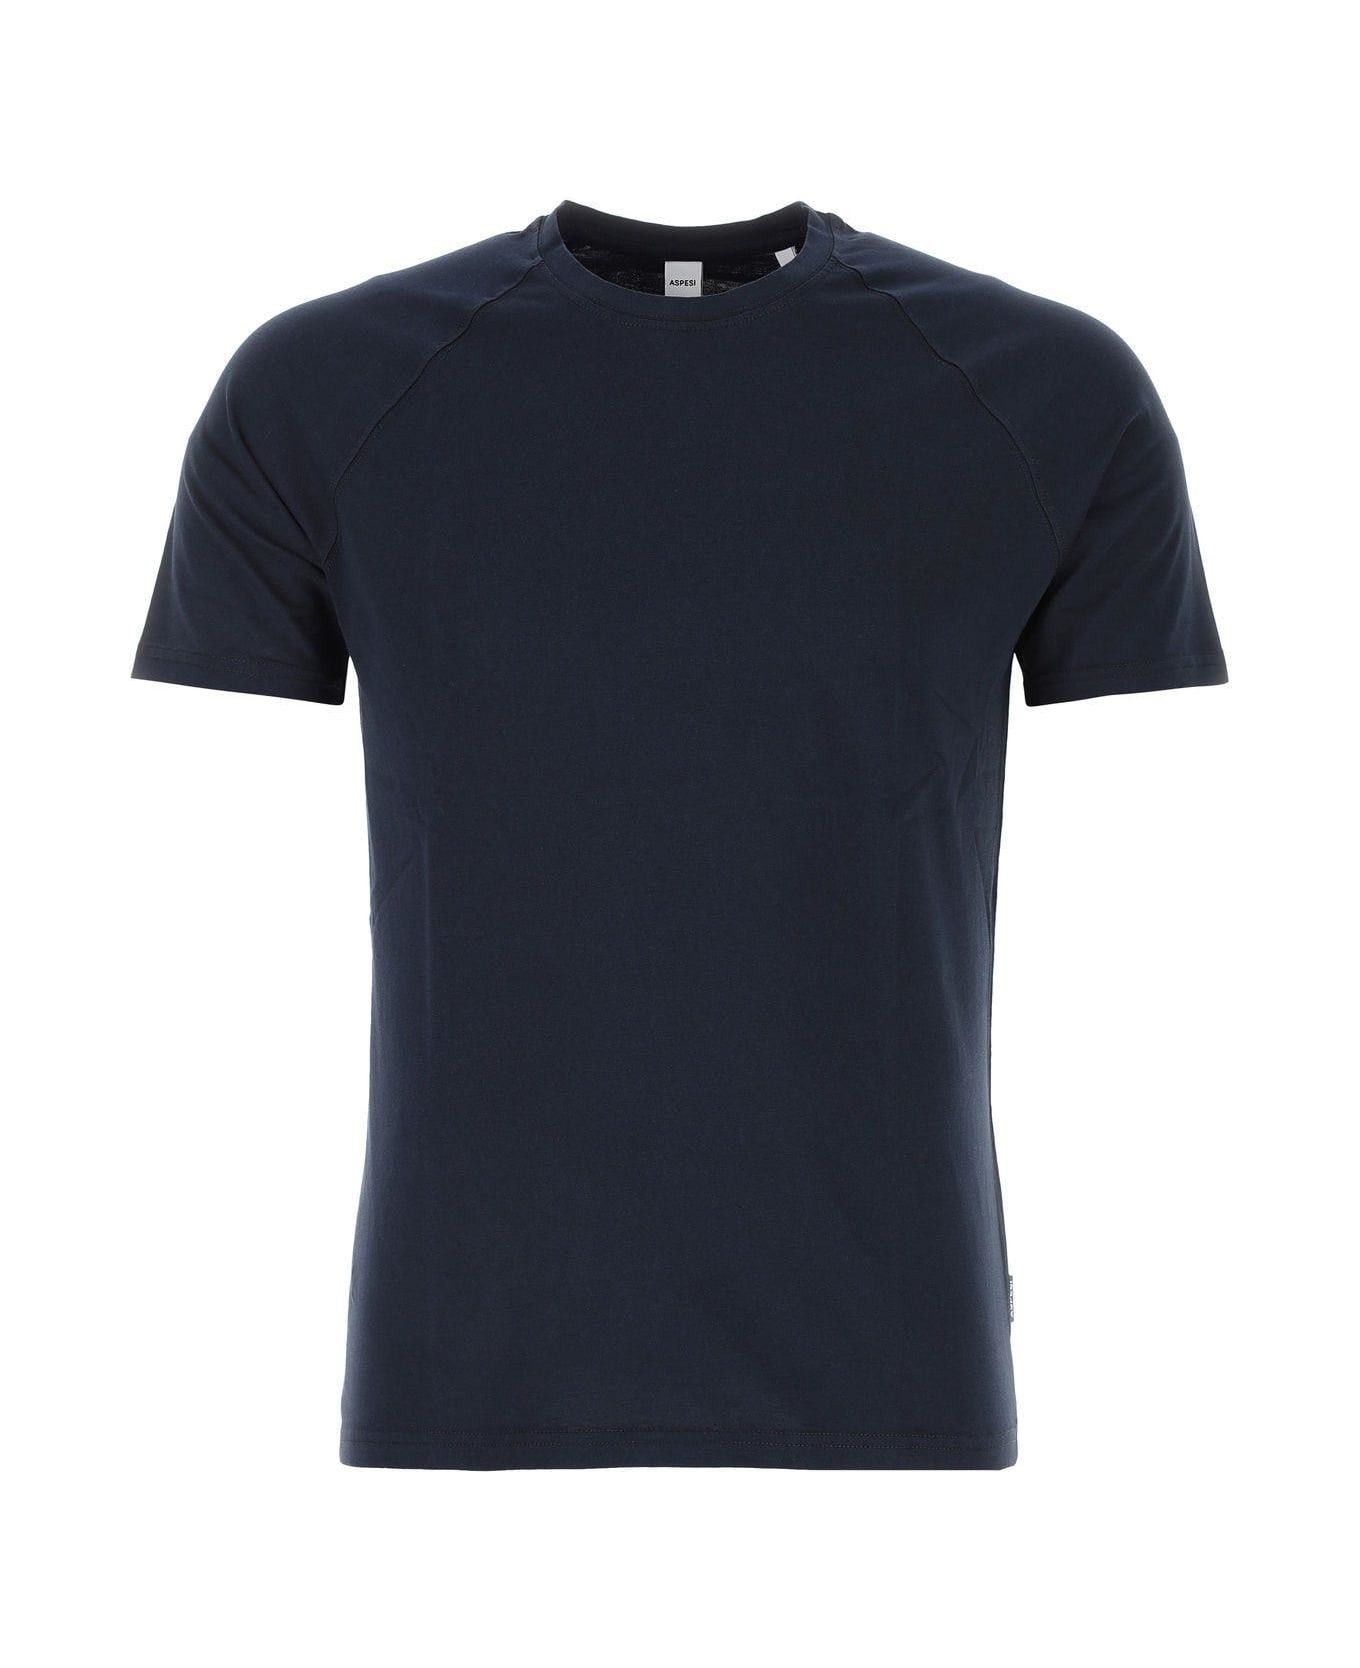 Aspesi Navy Blue Cotton T-shirt - Navy